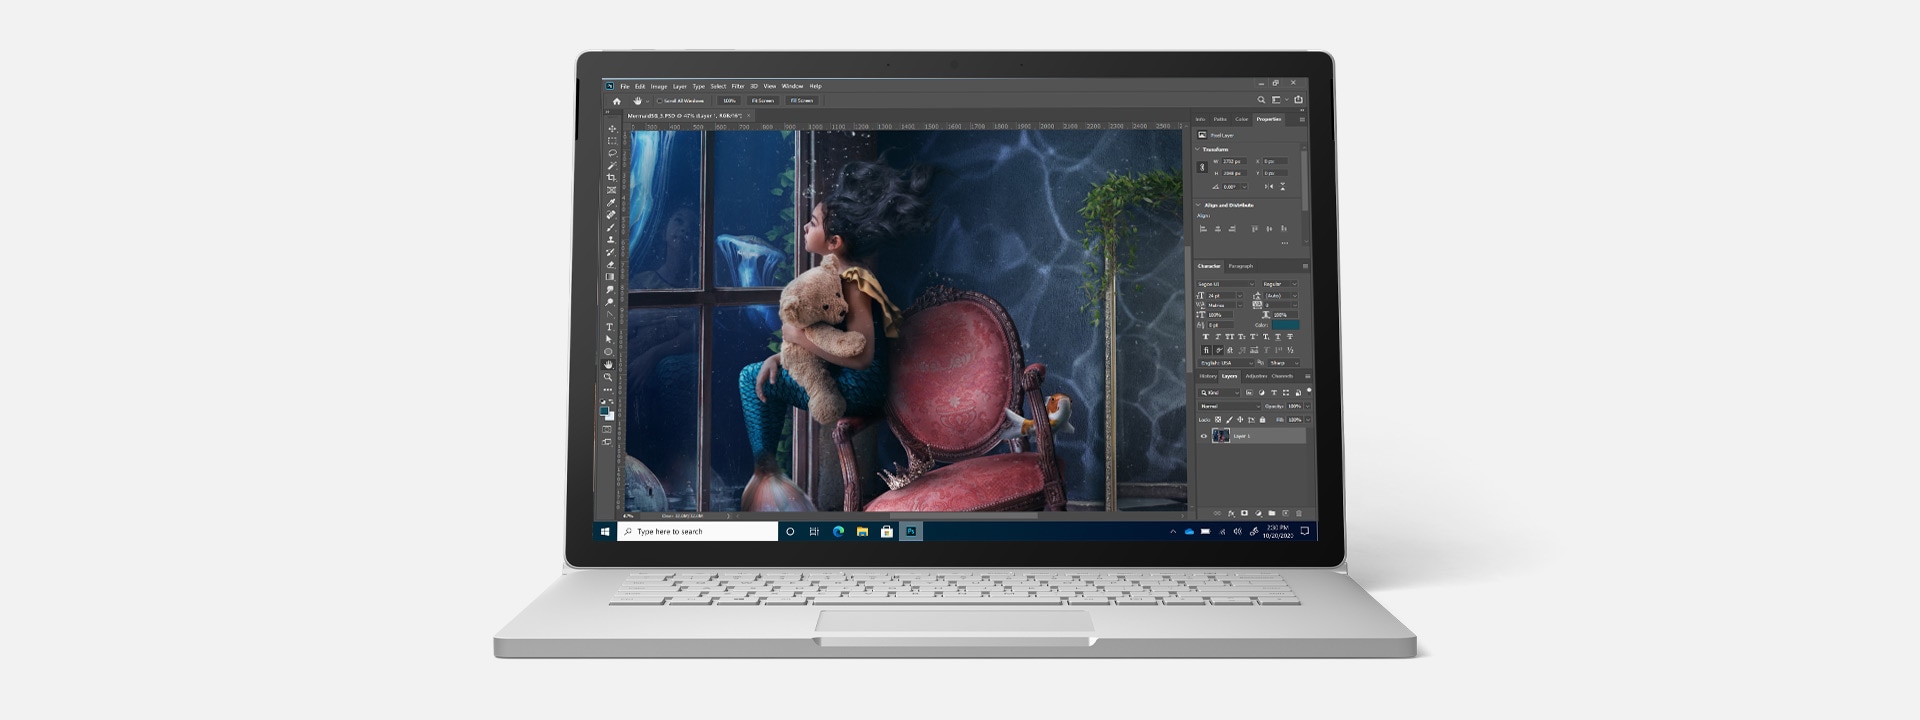 Surface Book 3 running Adobe Photoshop